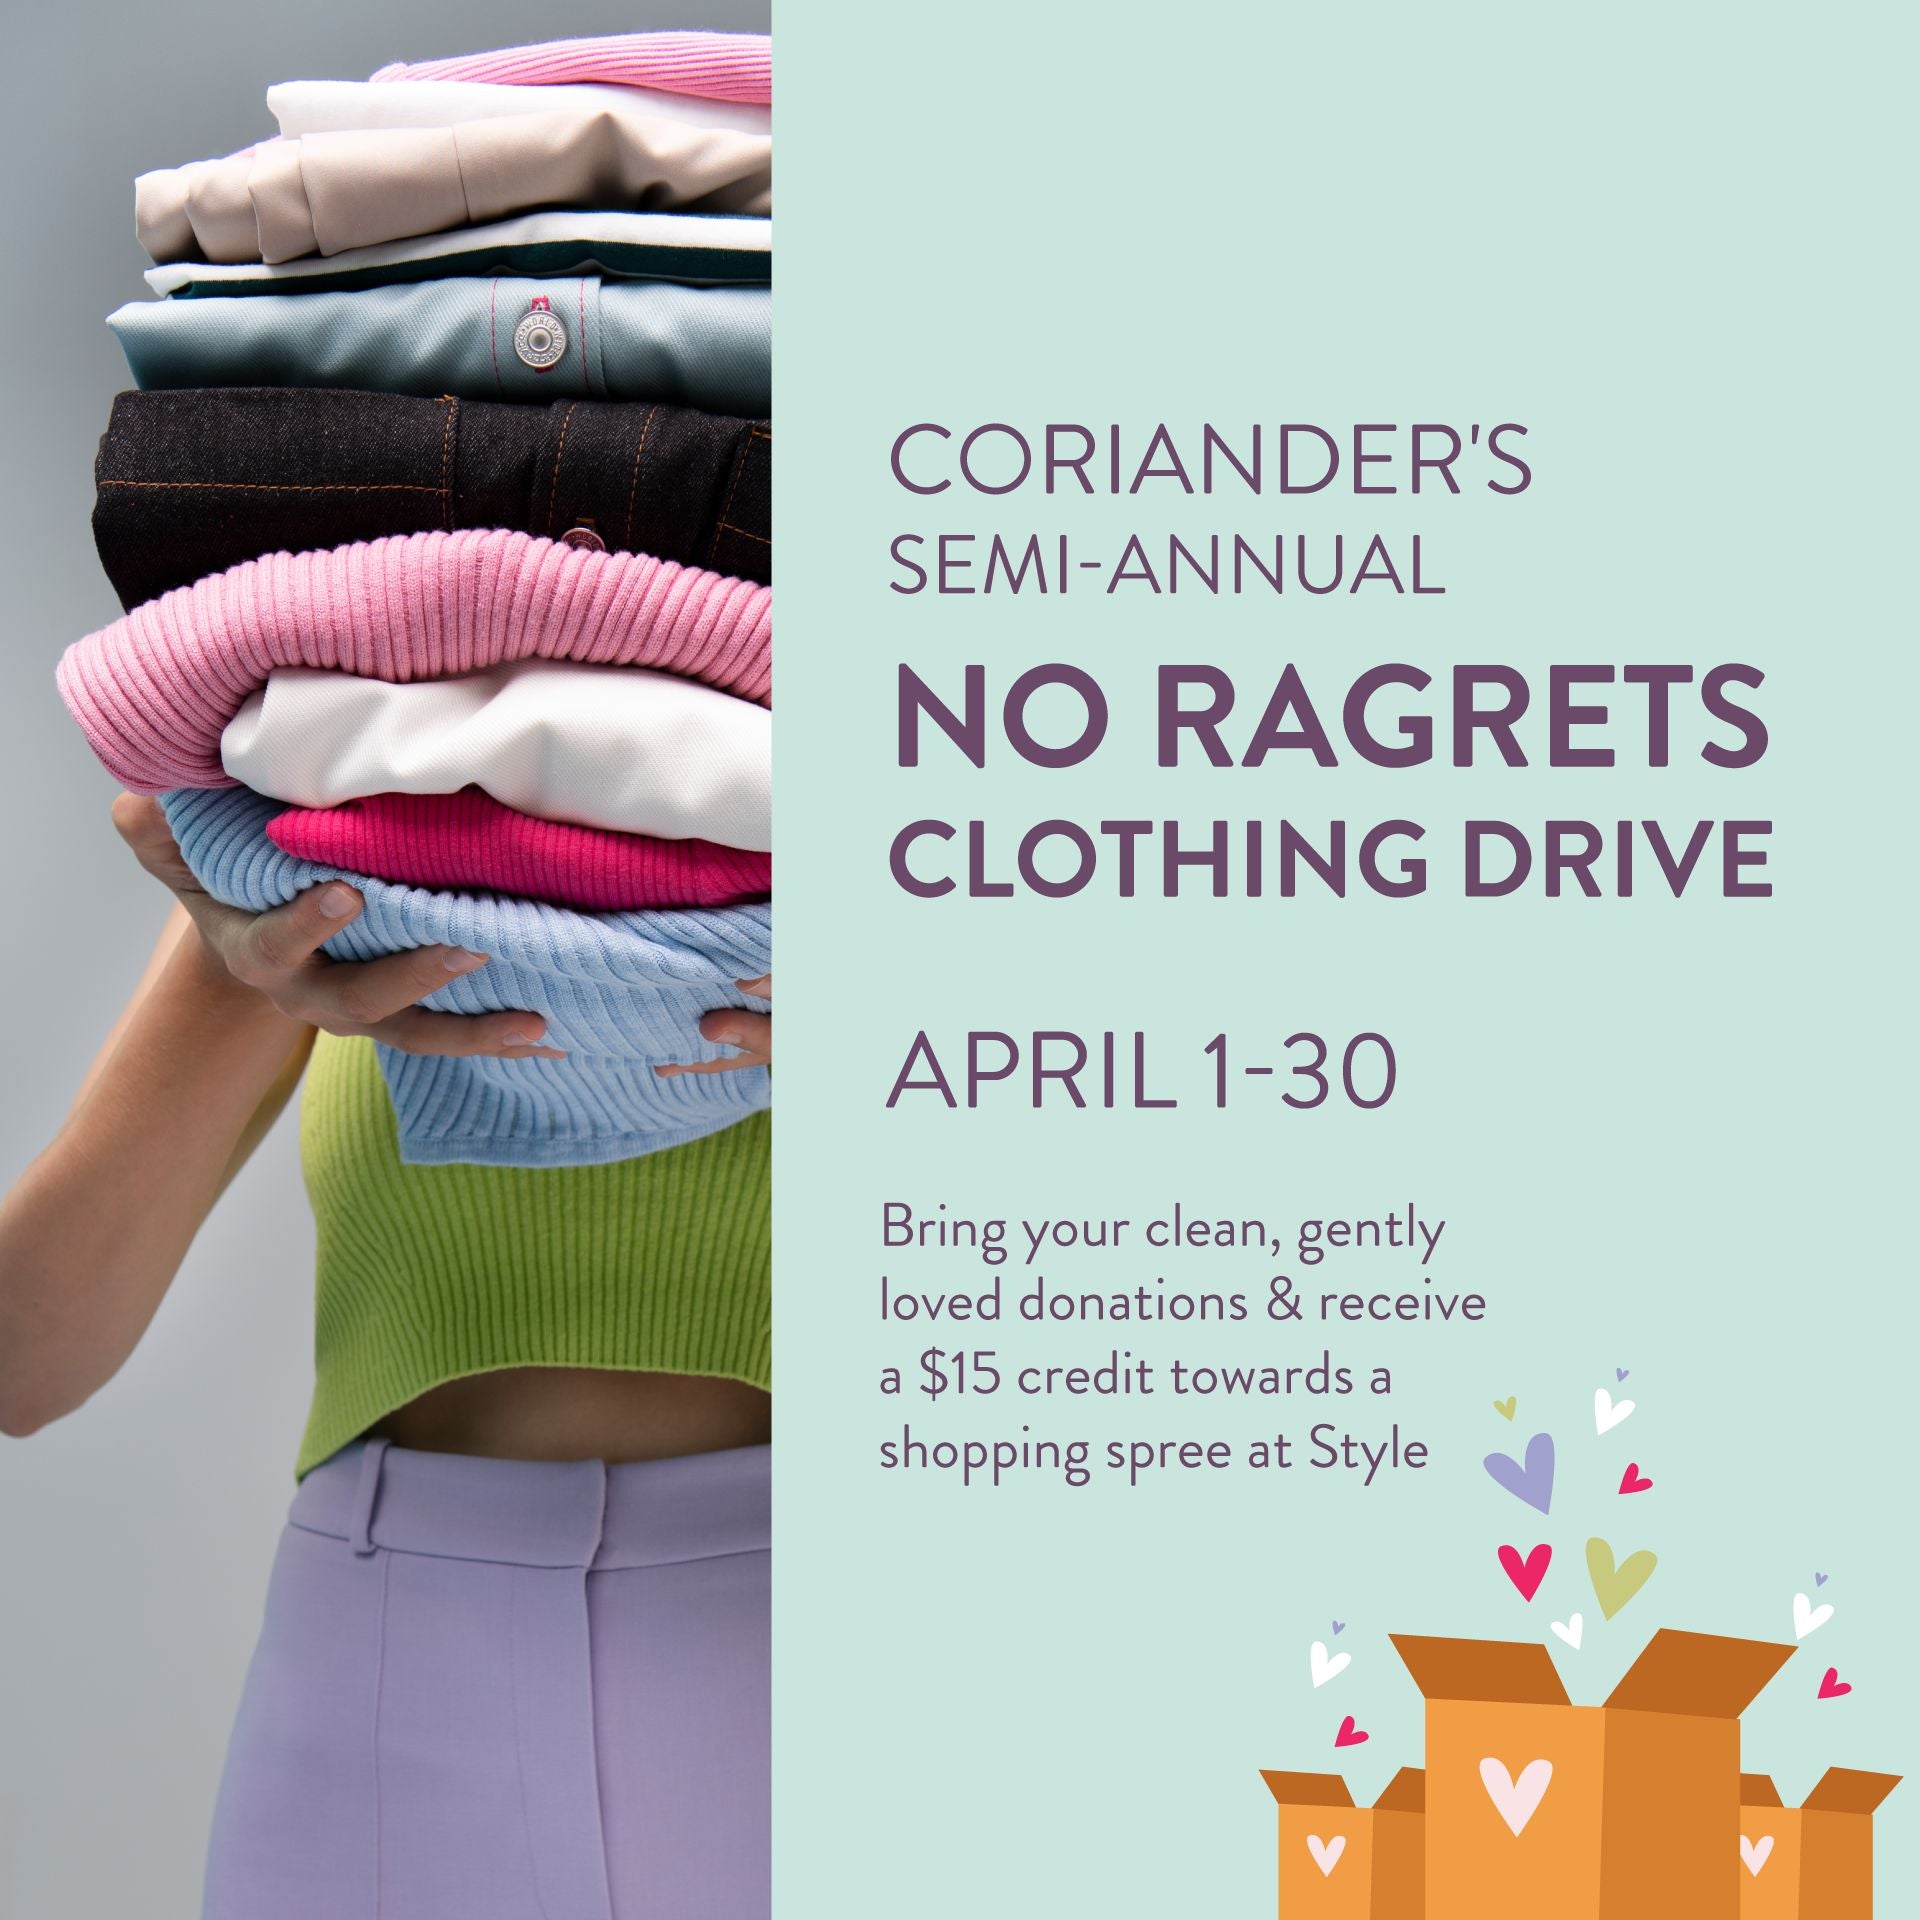 Coriander's No Ragrets Clothing Drive